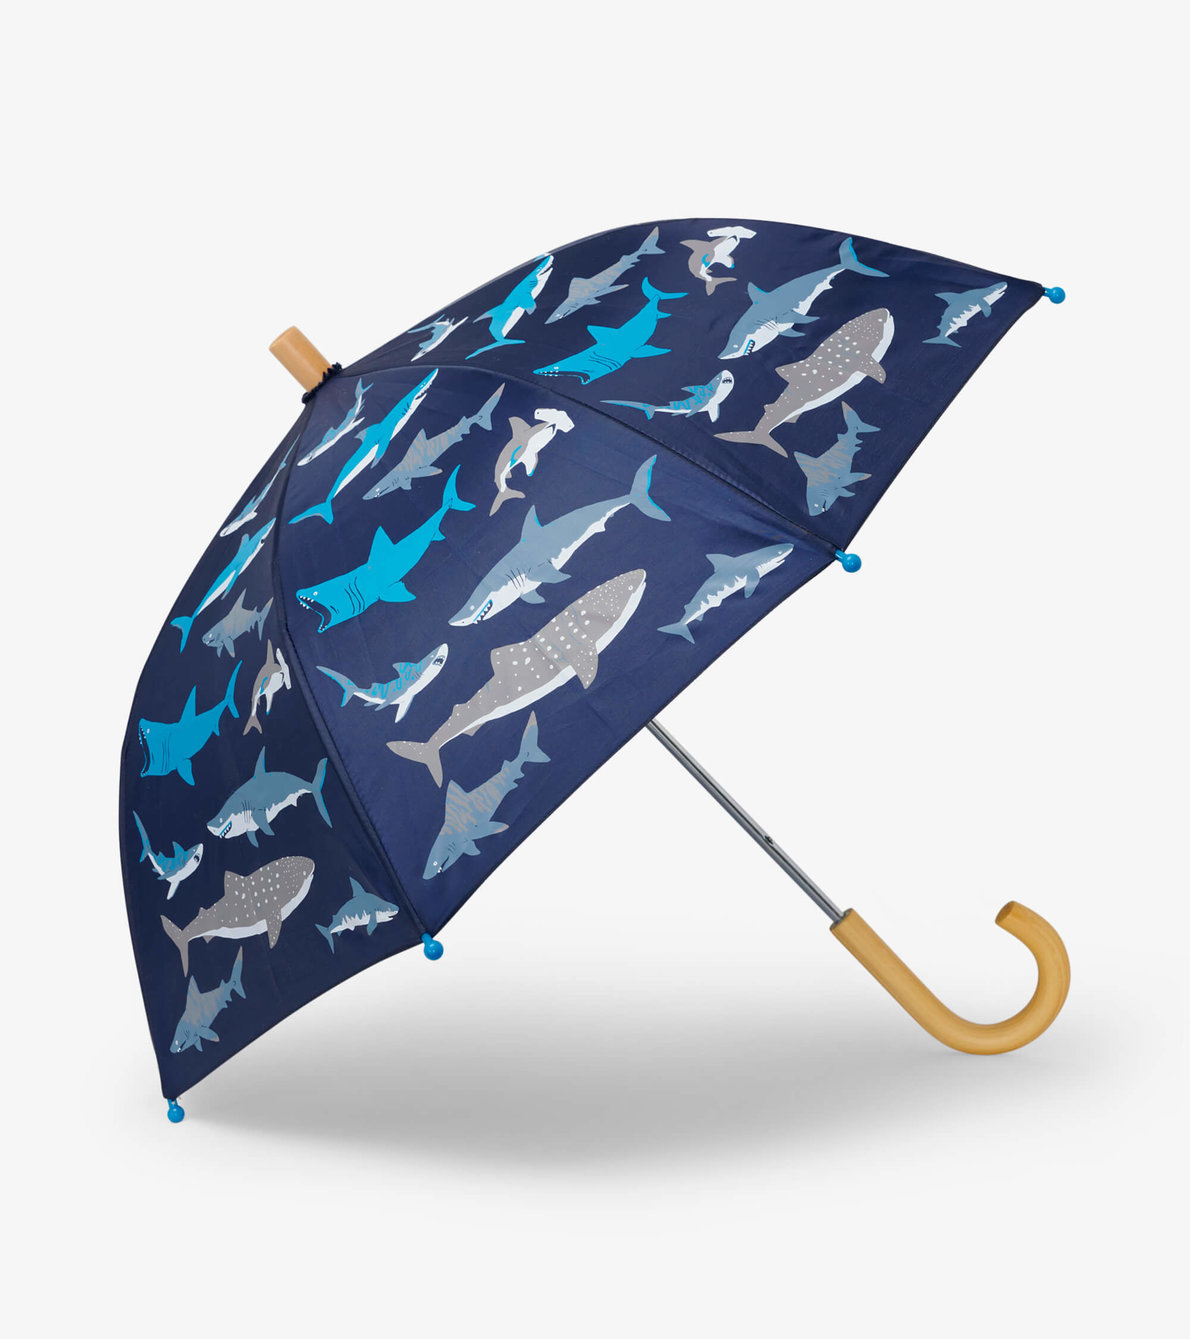 View larger image of Shark School Umbrella